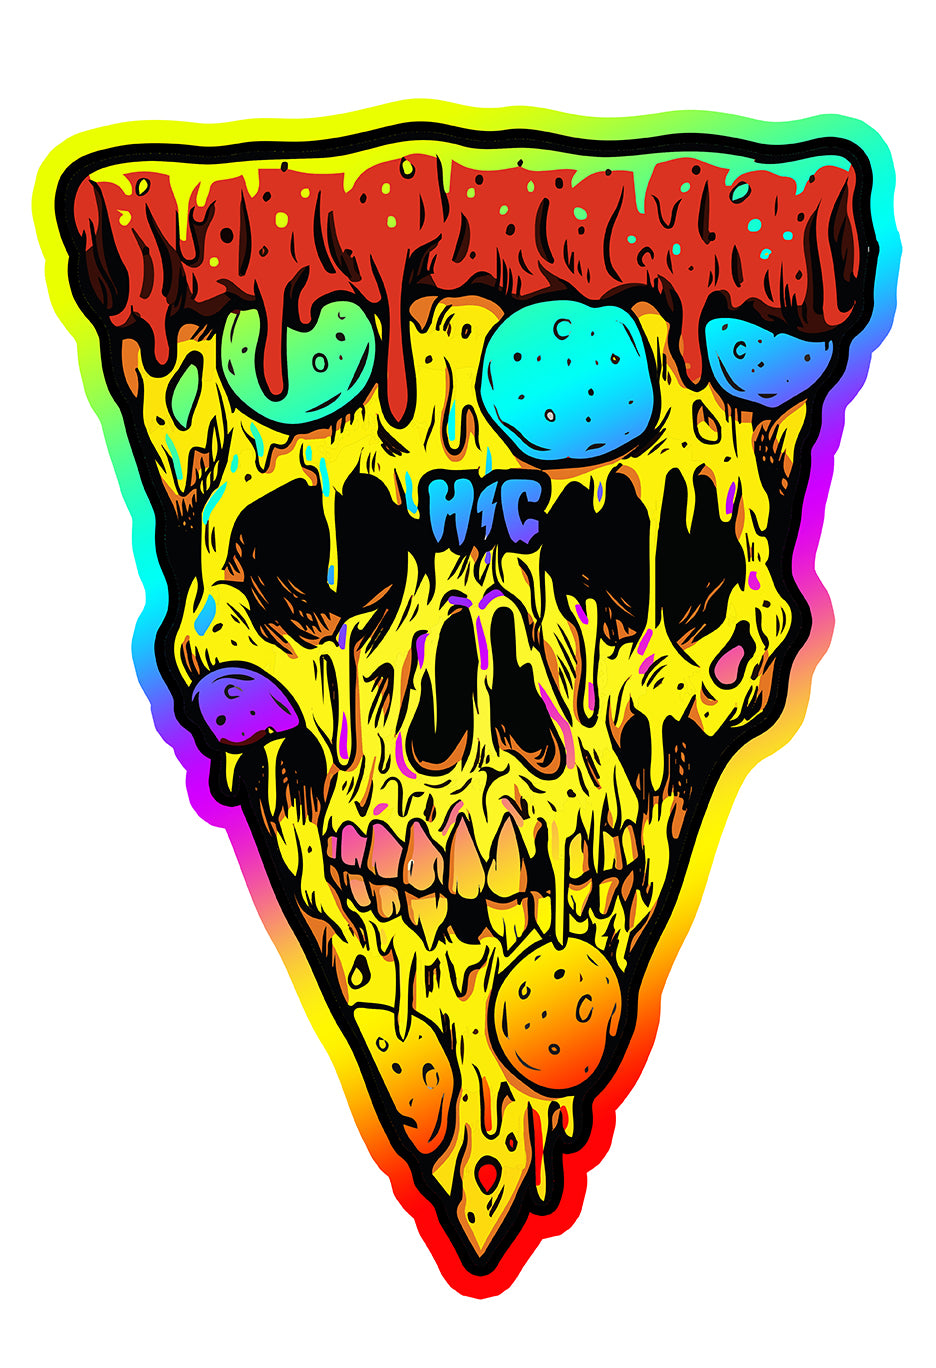 Pizza Skull Color 13 x 19 Poster Print